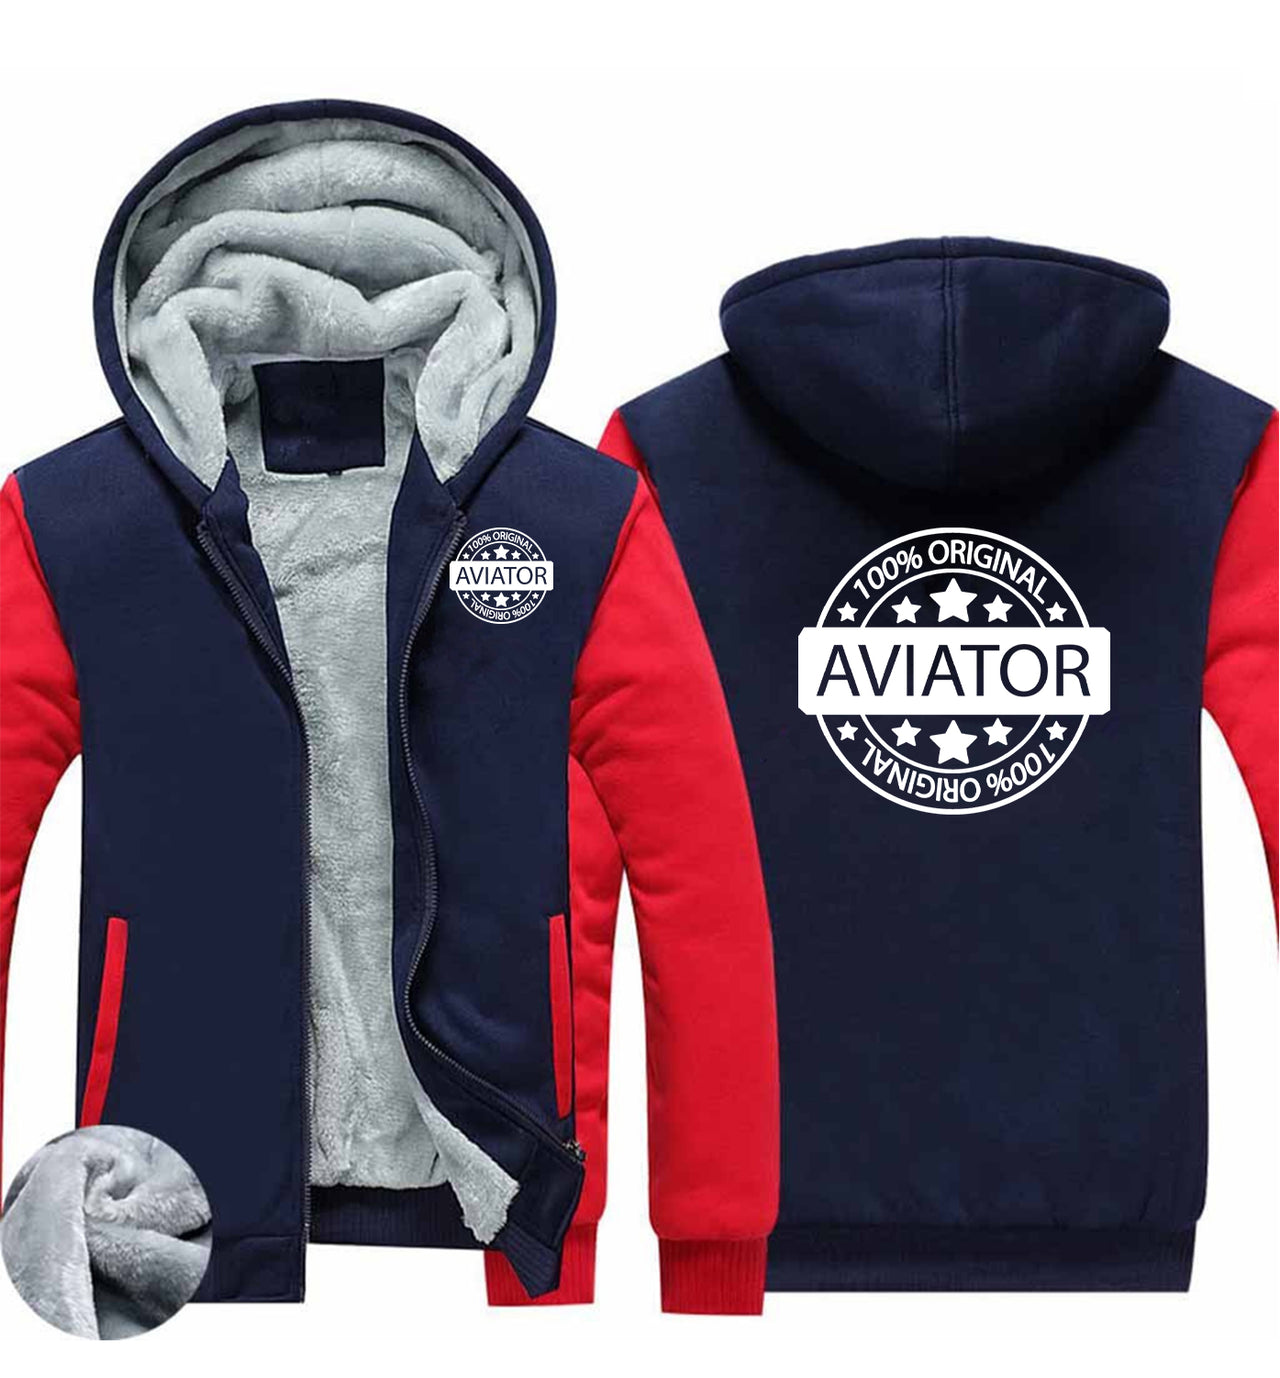 %100 Original Aviator Designed Zipped Sweatshirts